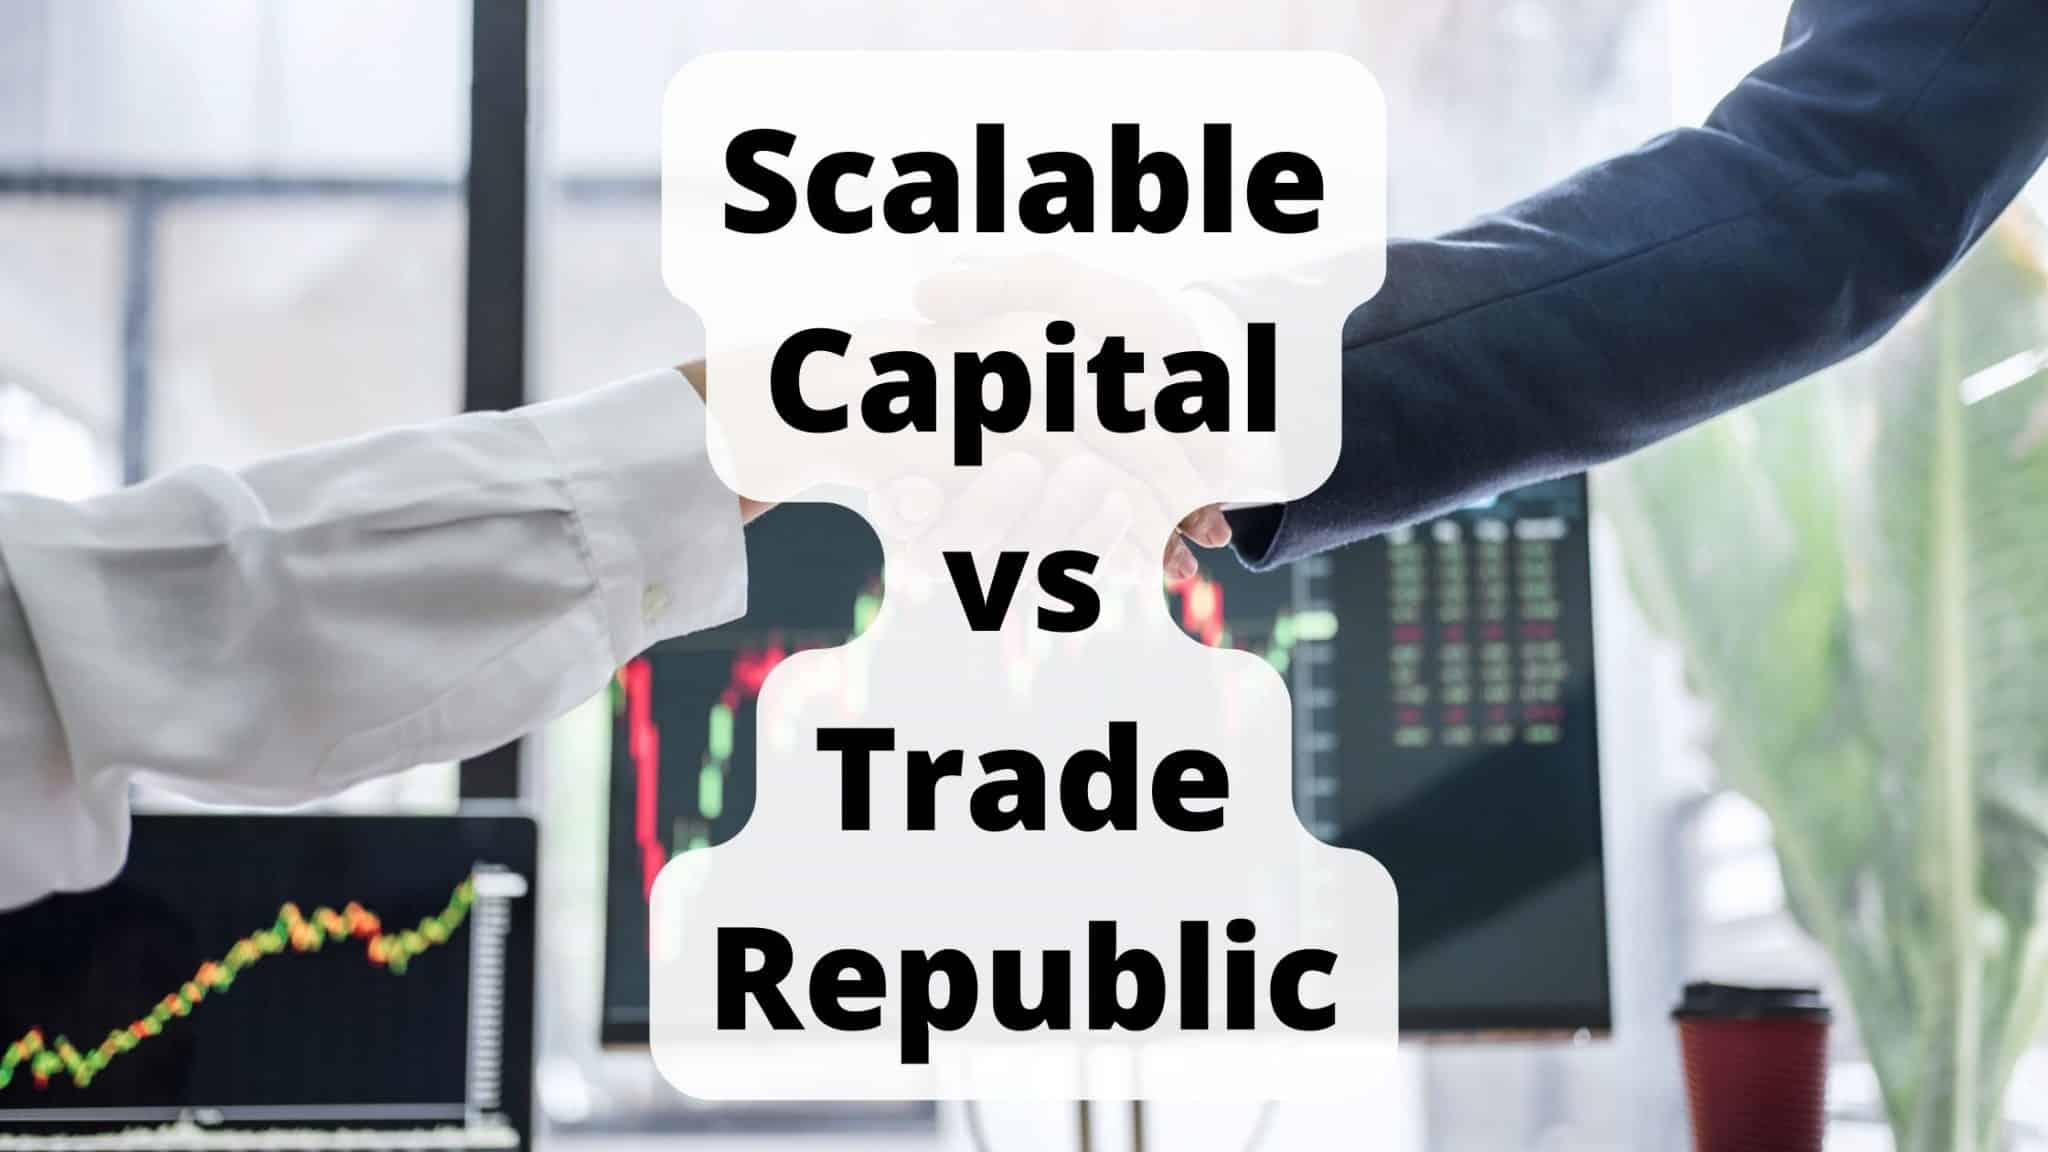 Scalable Capital vs Trade Republic